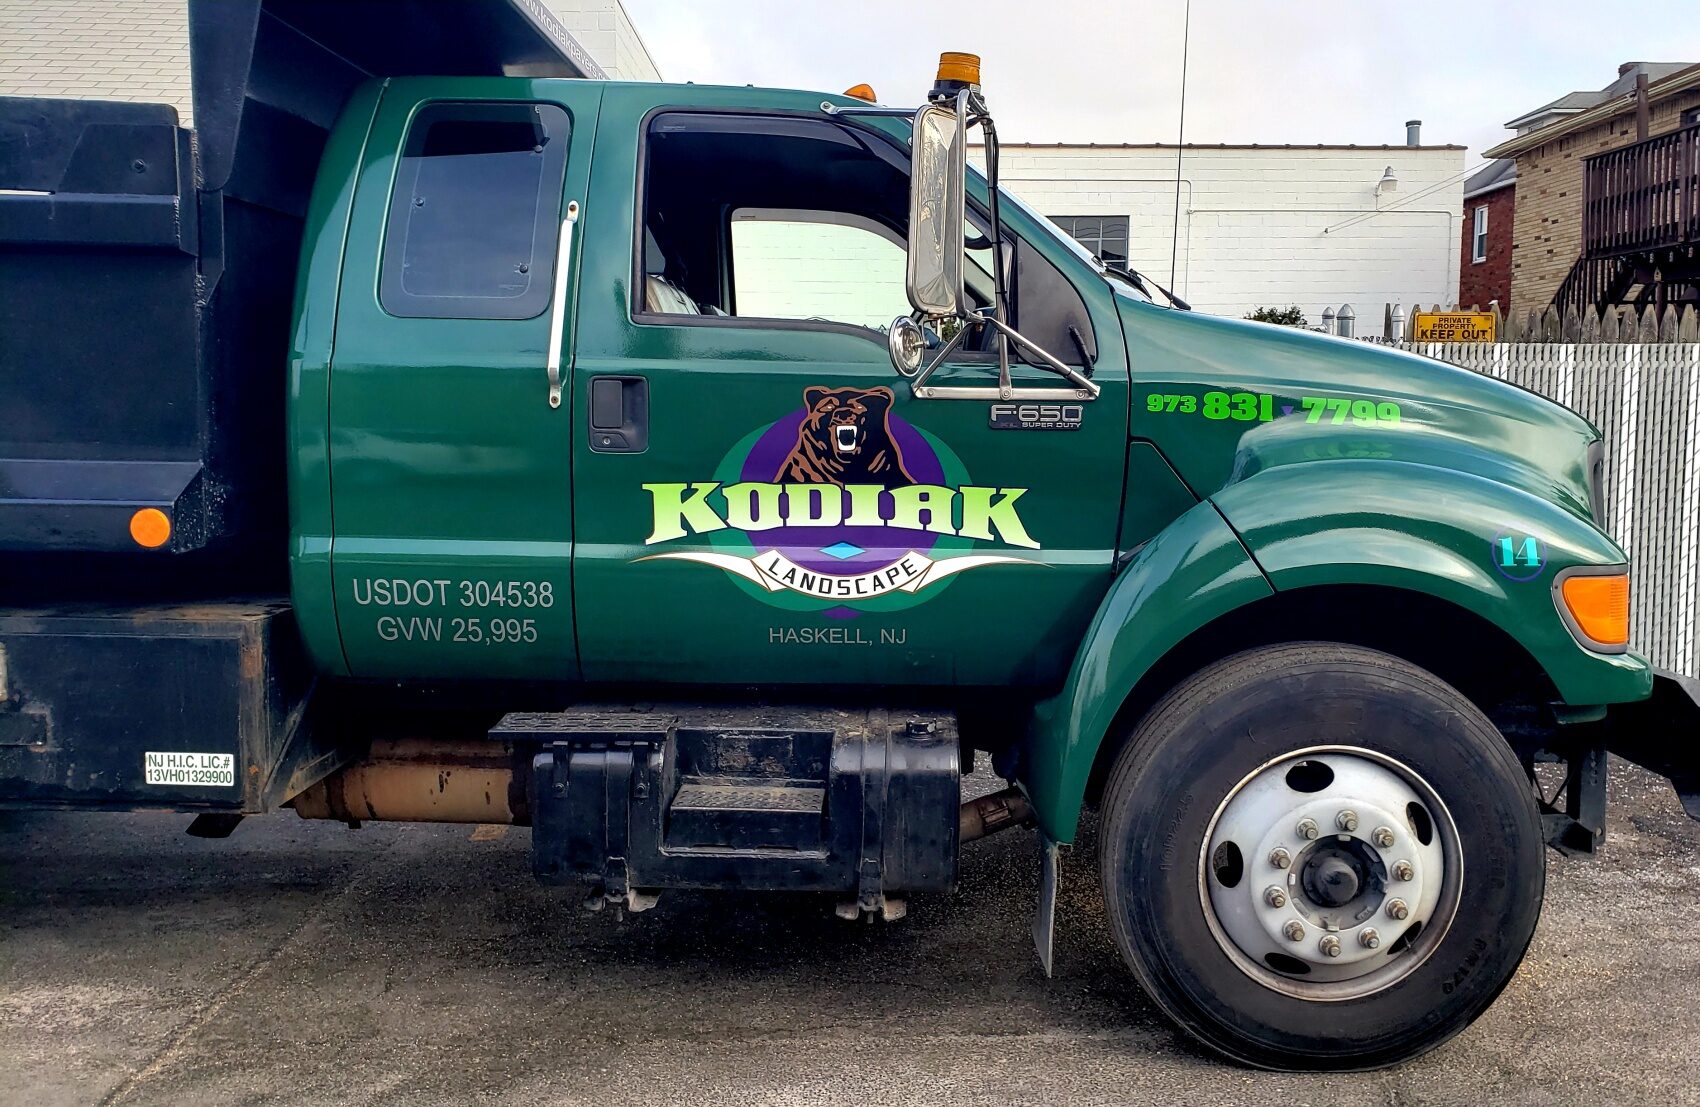 Kodiak landscaping truck color change